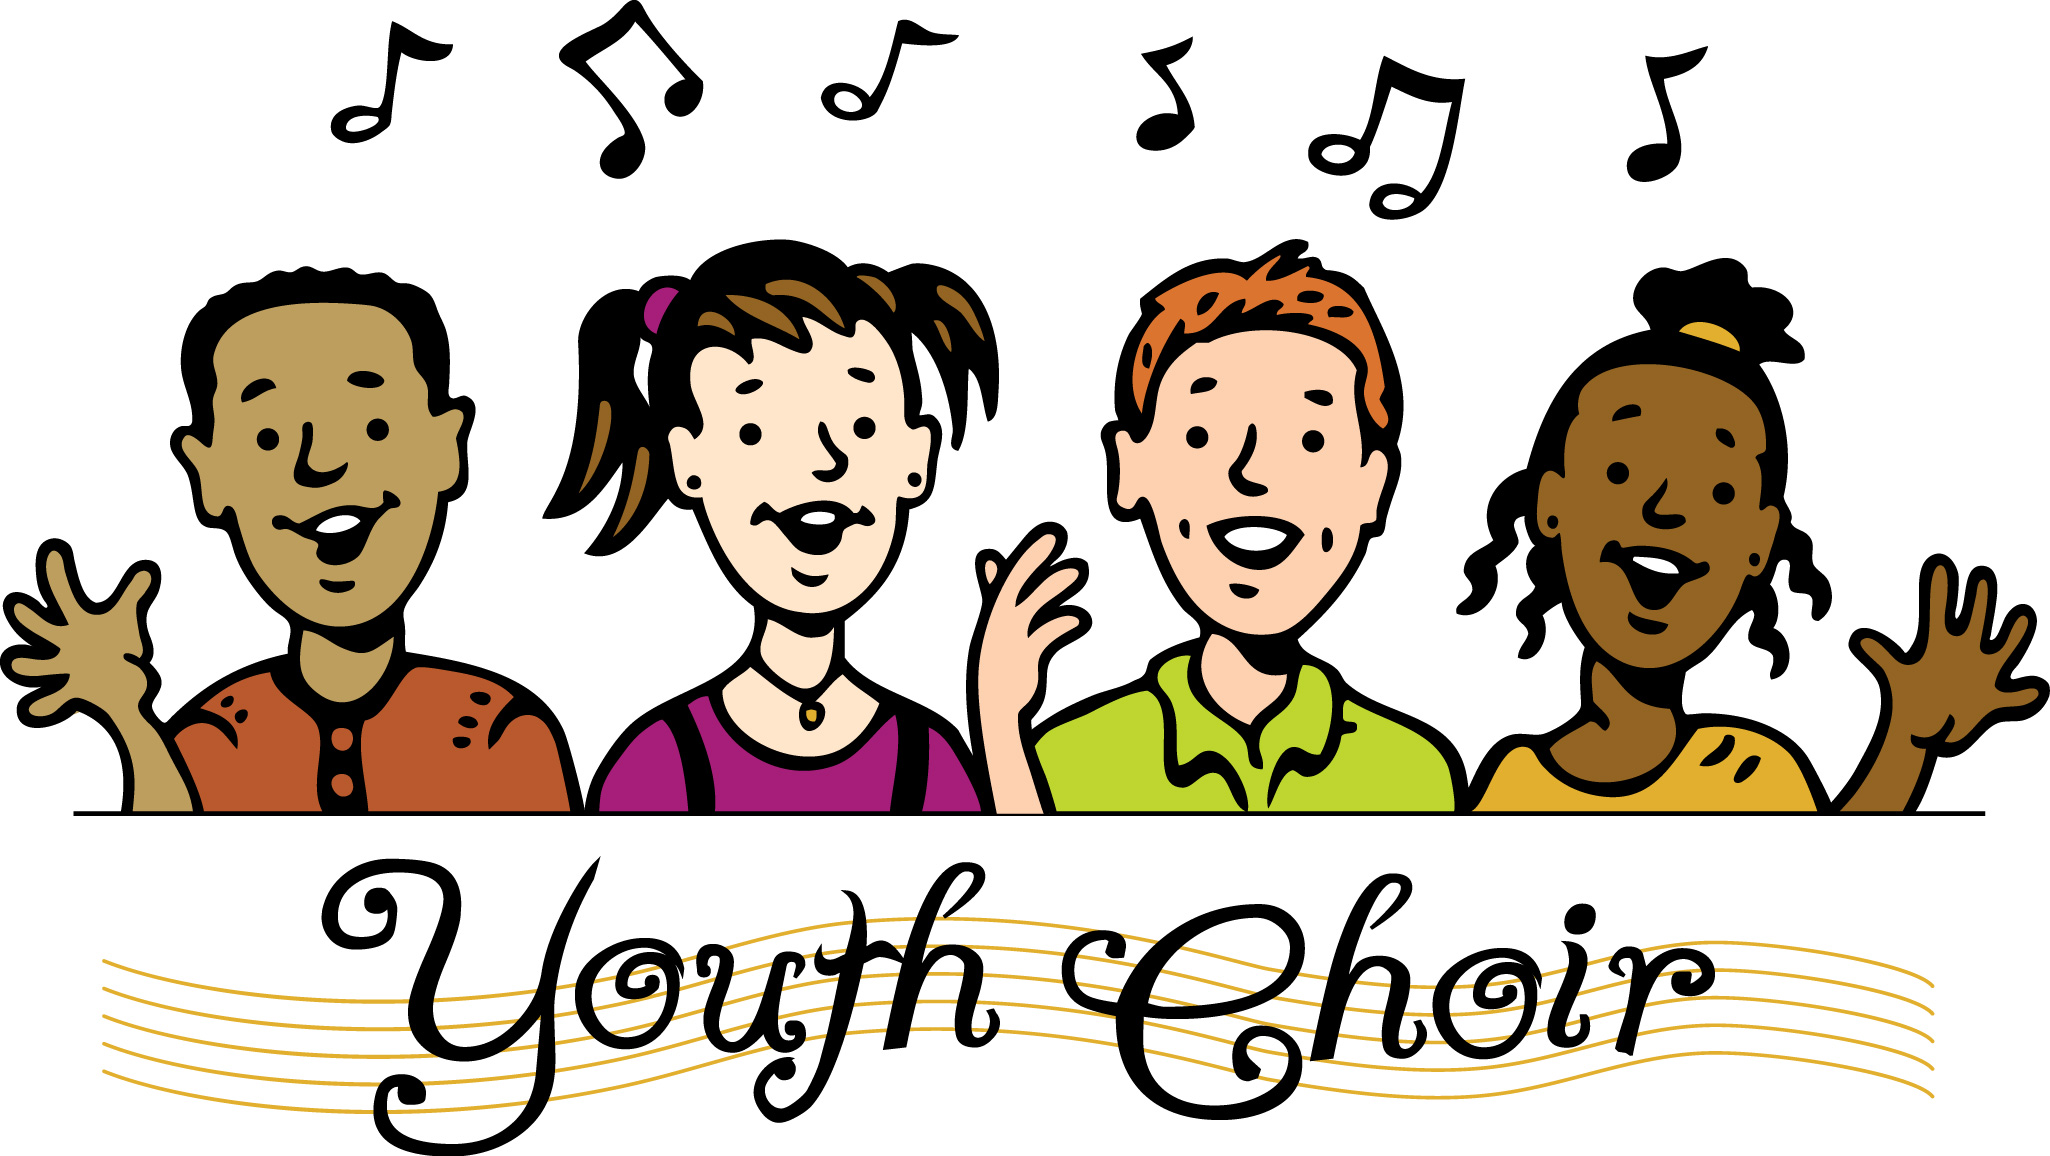 Choir clip art boys and girls singing - Clipartix